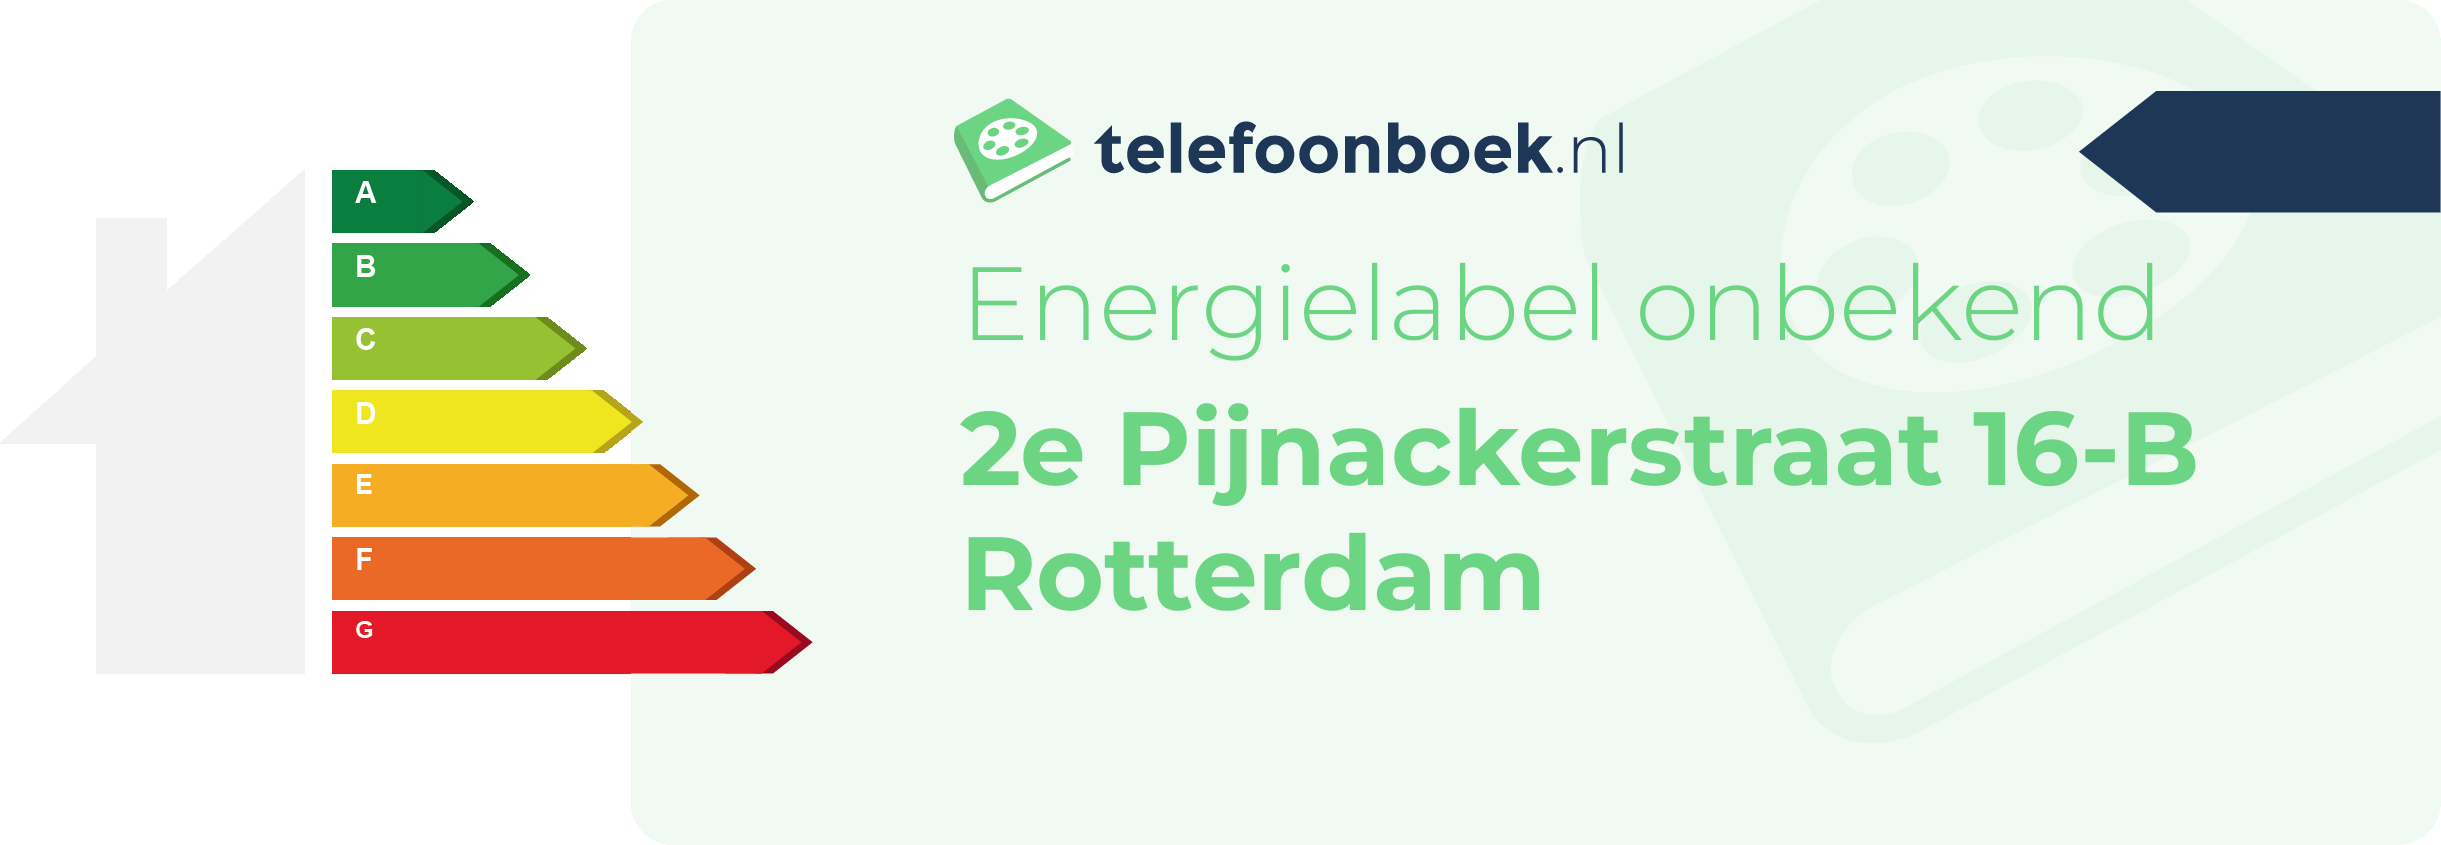 Energielabel 2e Pijnackerstraat 16-B Rotterdam